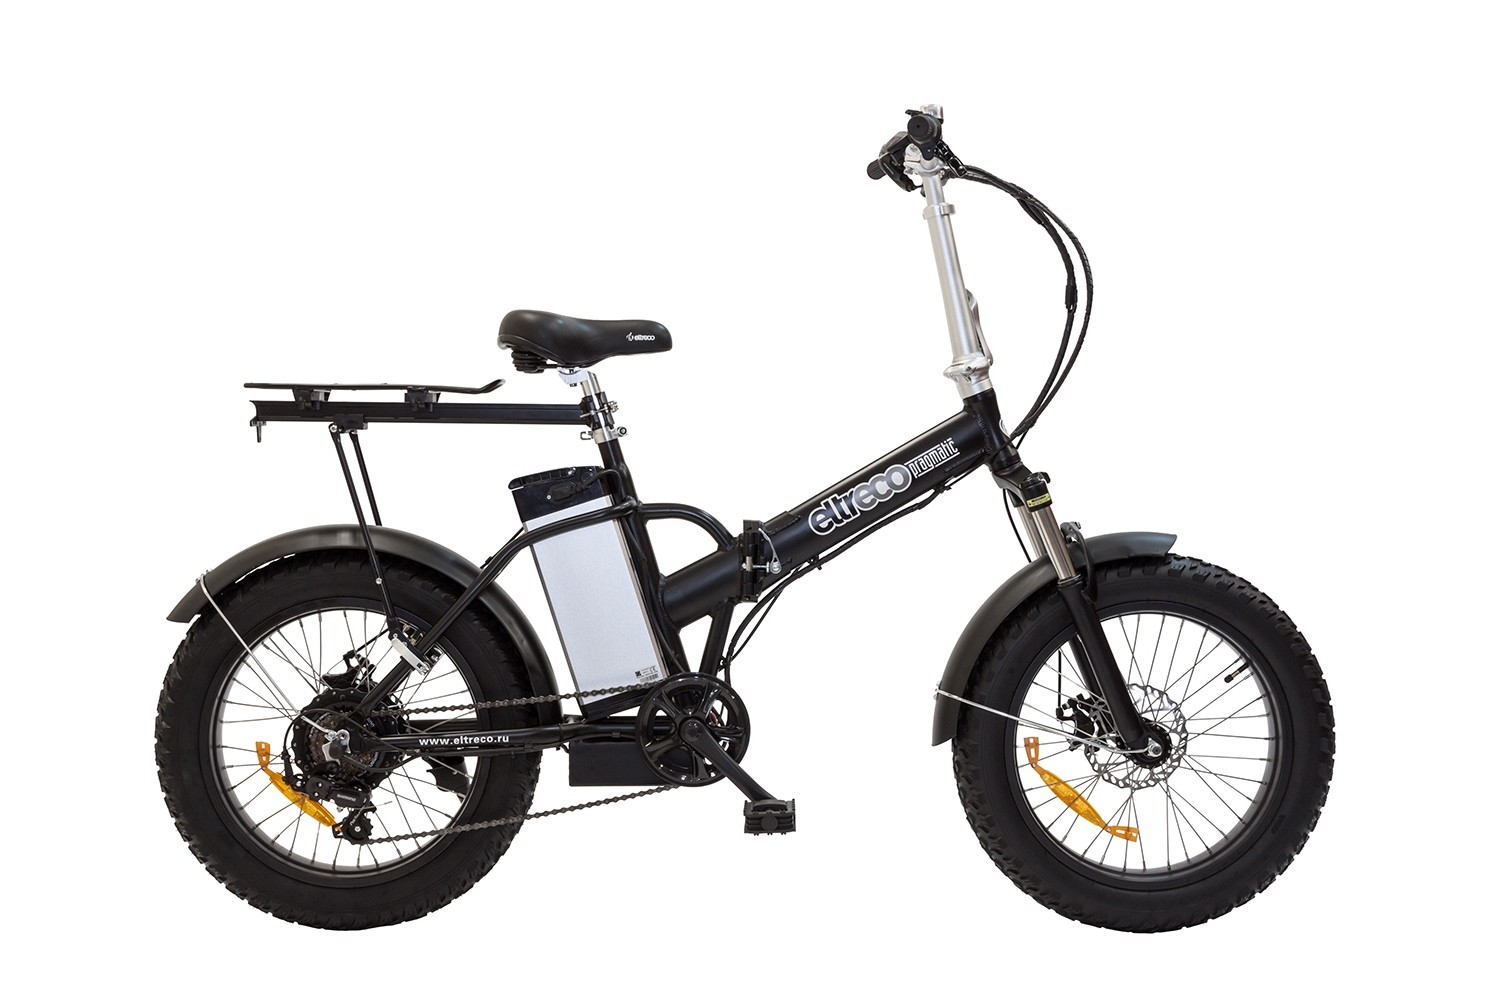 Электровелосипед байк купить. Велогибрид Cyberbike fat 500w. Электровелосипед Eltreco 500 ватт. Электро фэтбайк Cyberbike fat 500w. Складной велосипед Эльтреко 500w.